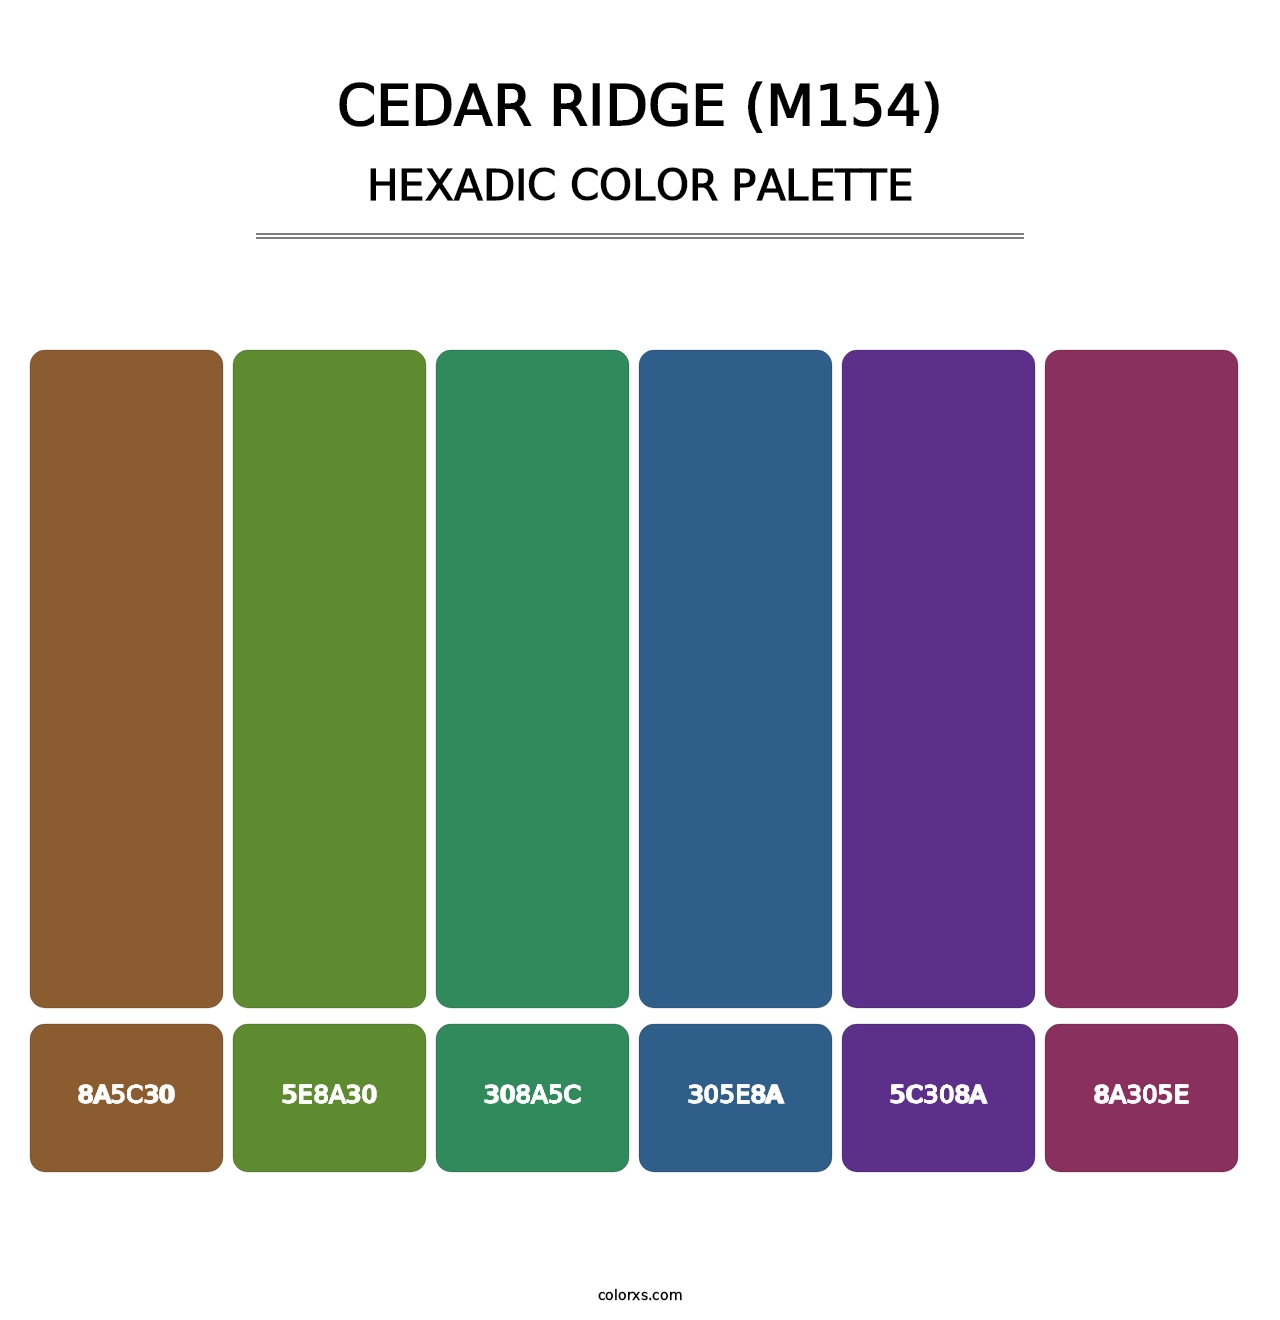 Cedar Ridge (M154) - Hexadic Color Palette